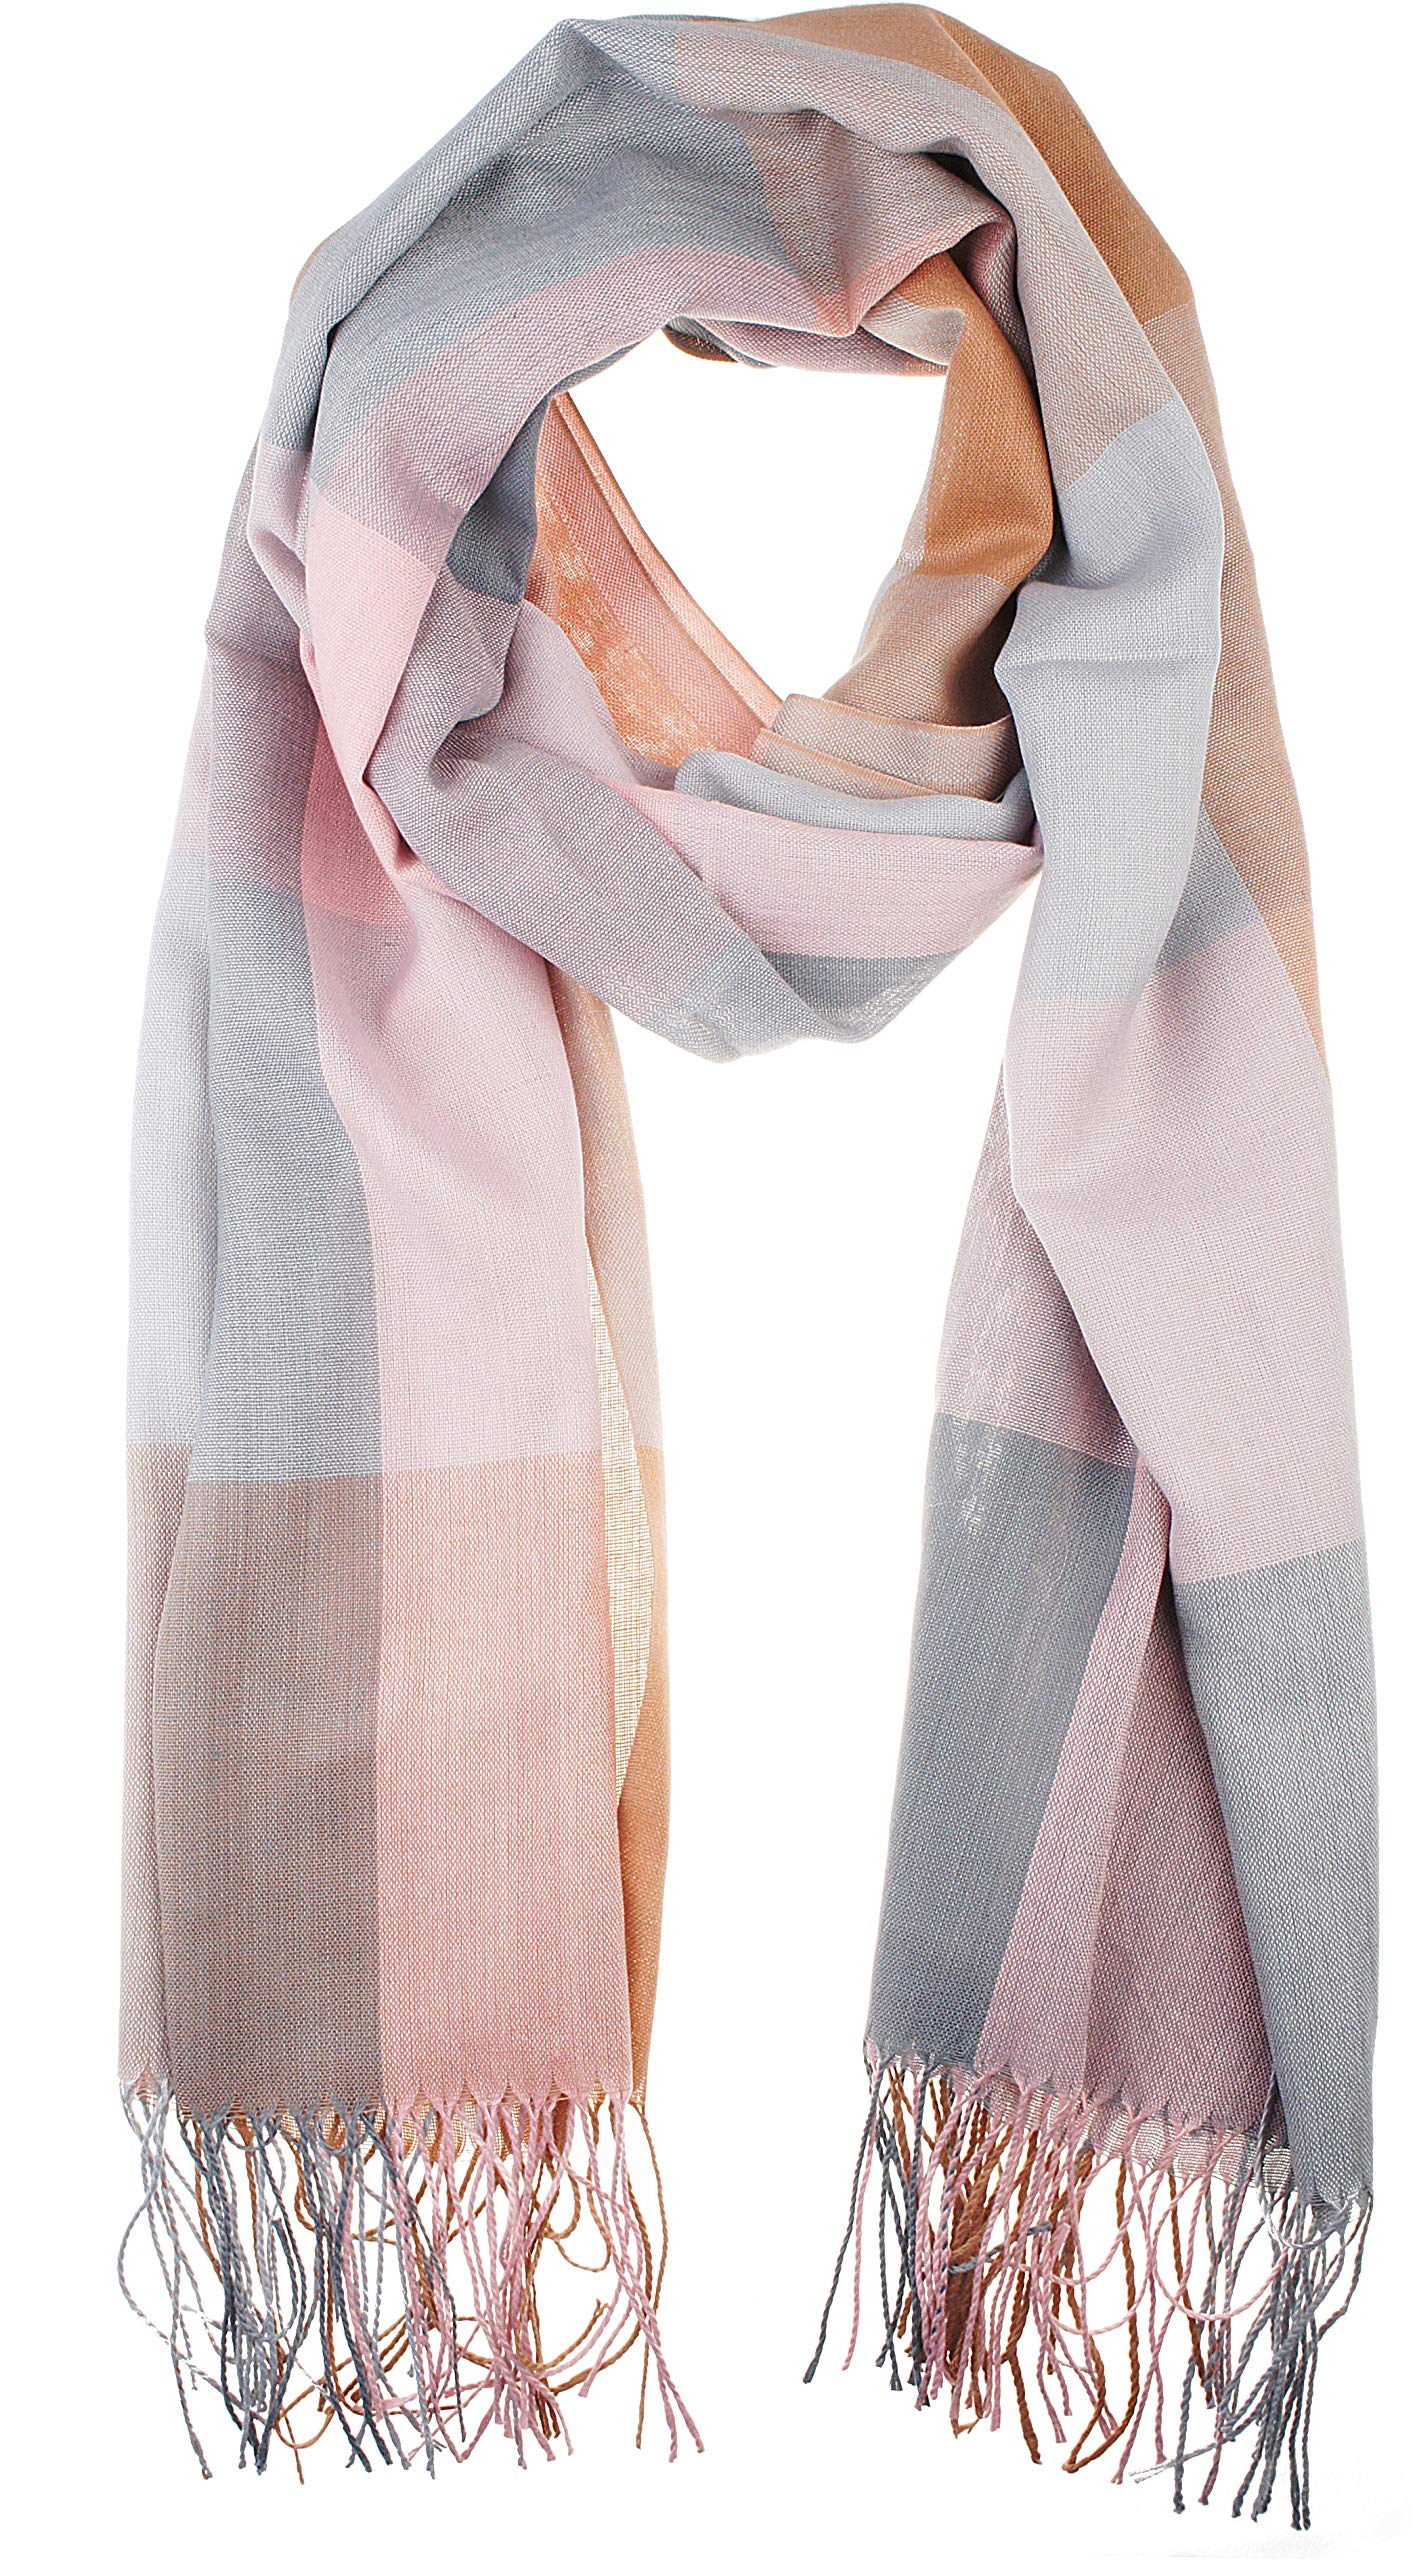 Women's Light Weight Plaid Tartan Sheer Blanket Scarf Shawl Wrap